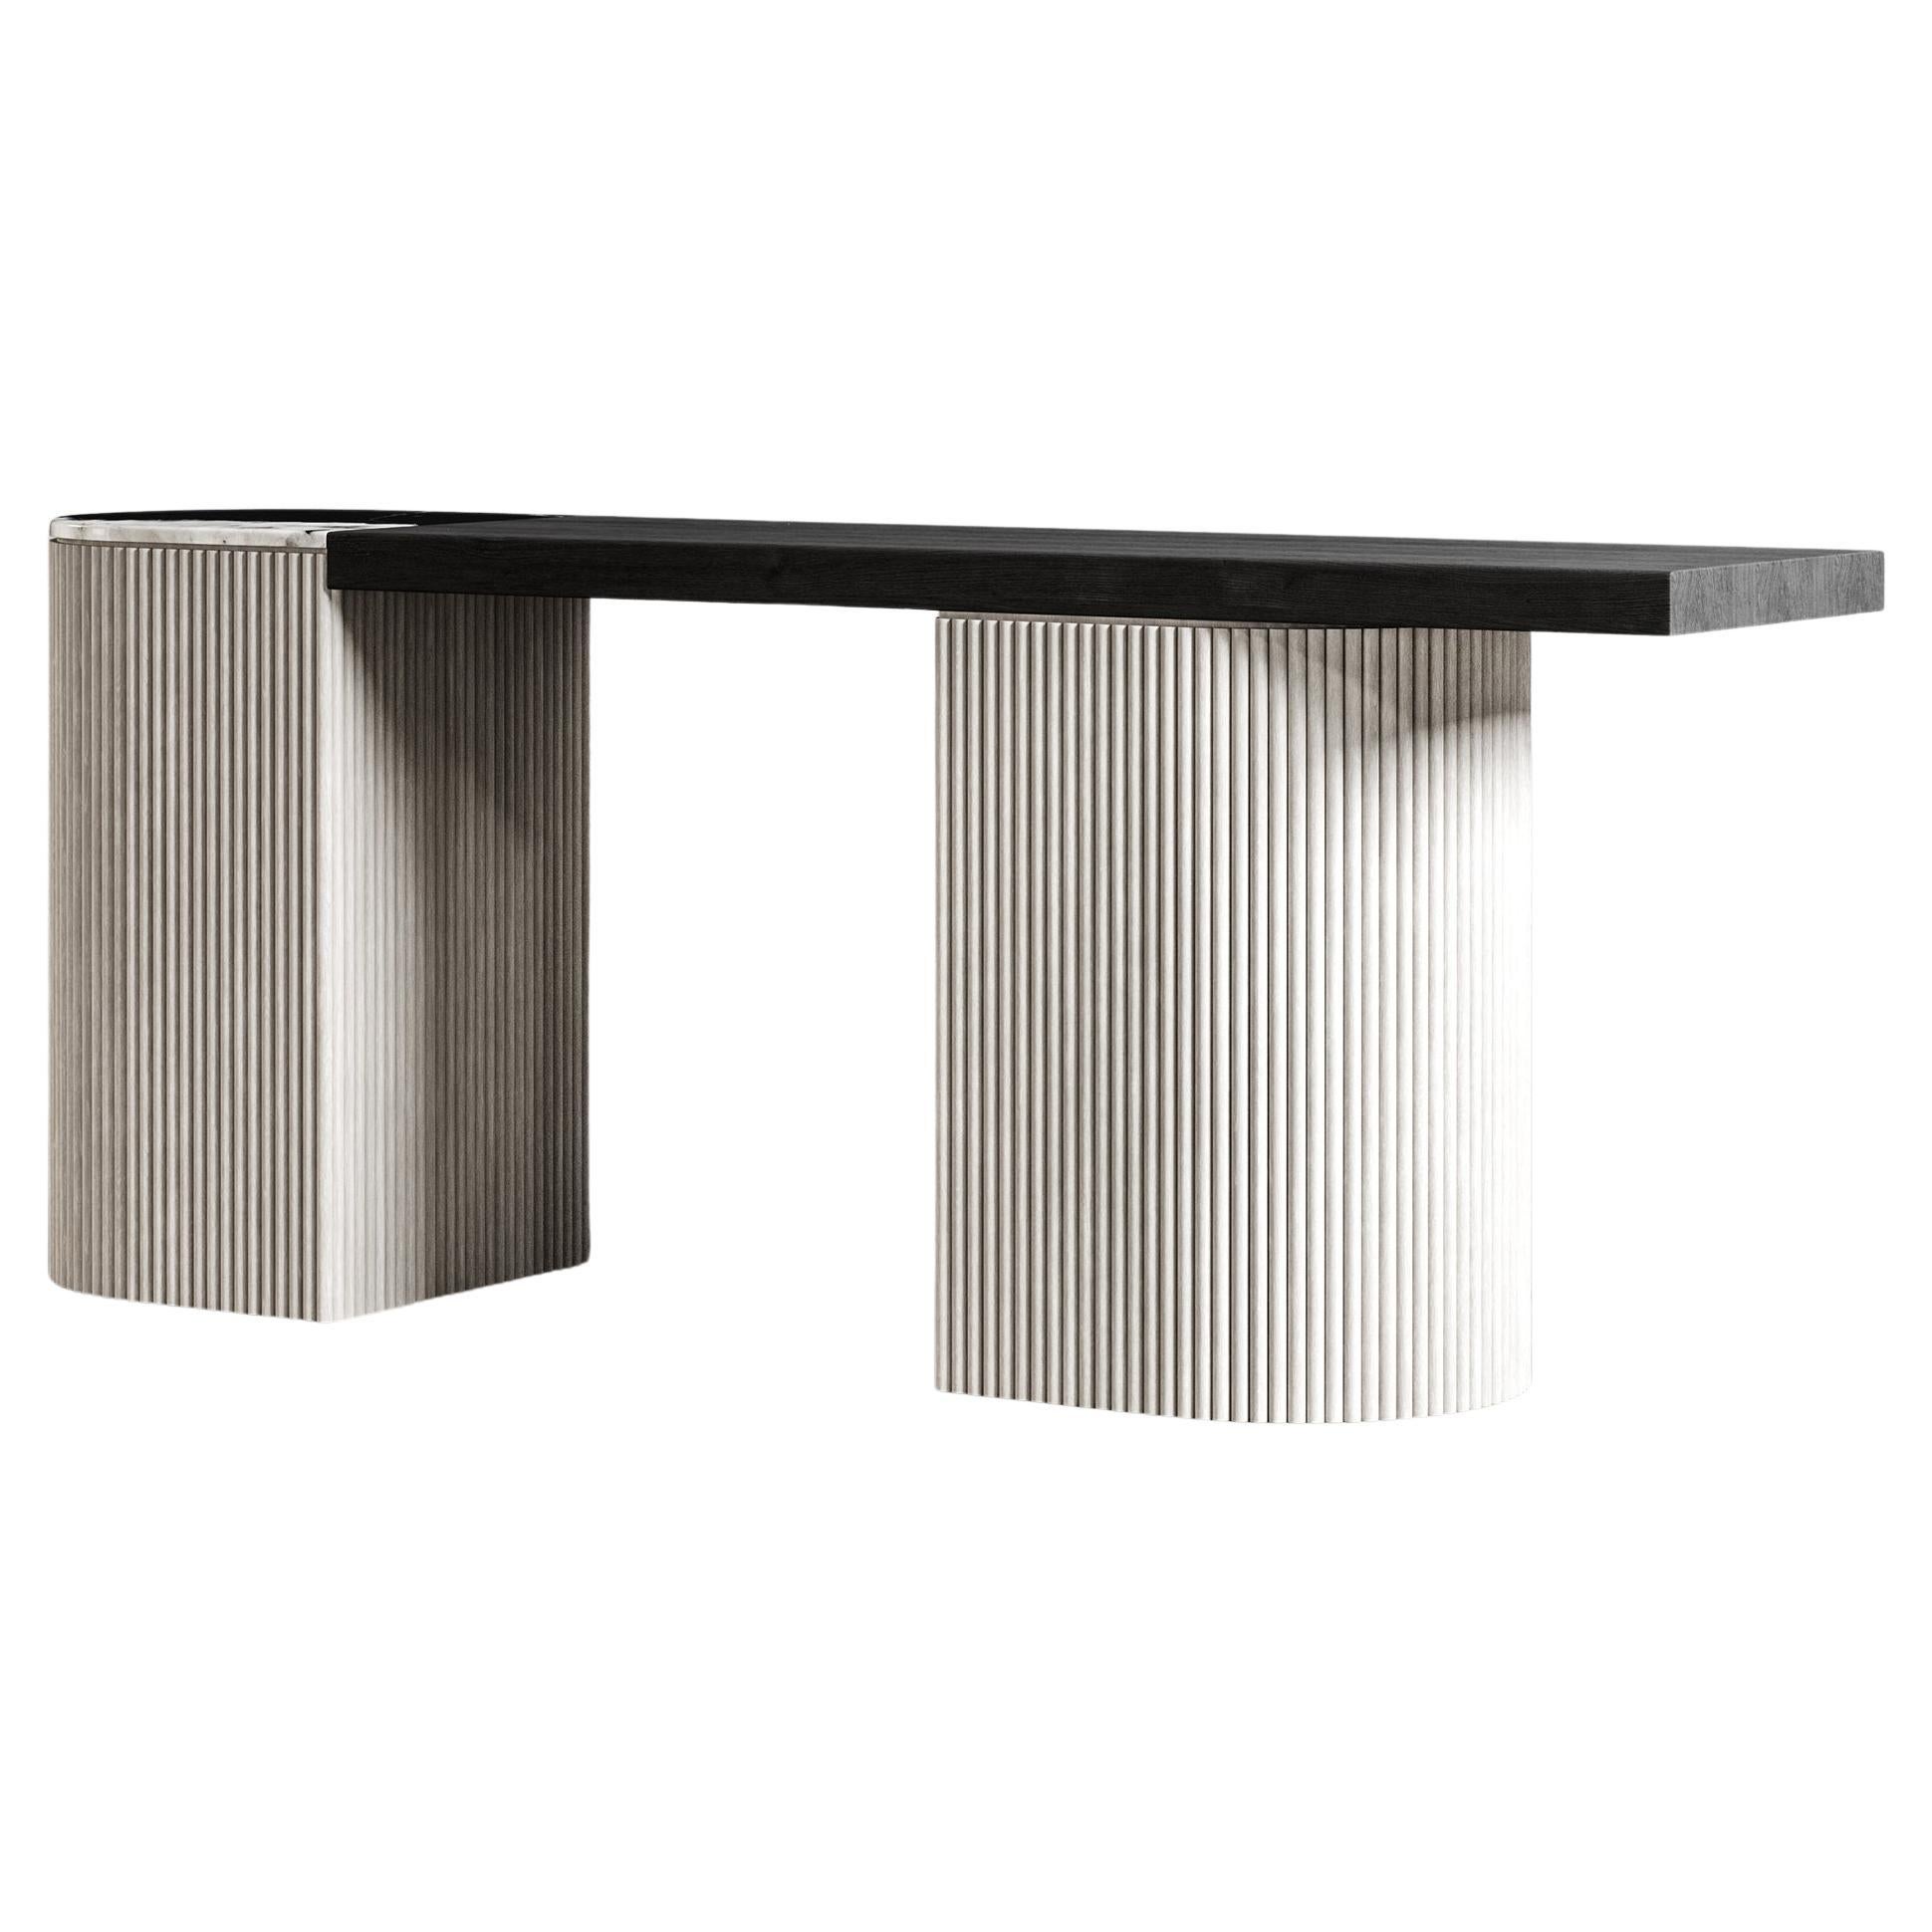 SWAY CONSOLE - Modern Design with Sandy & Ebony Oak, Nero Marquina Marble